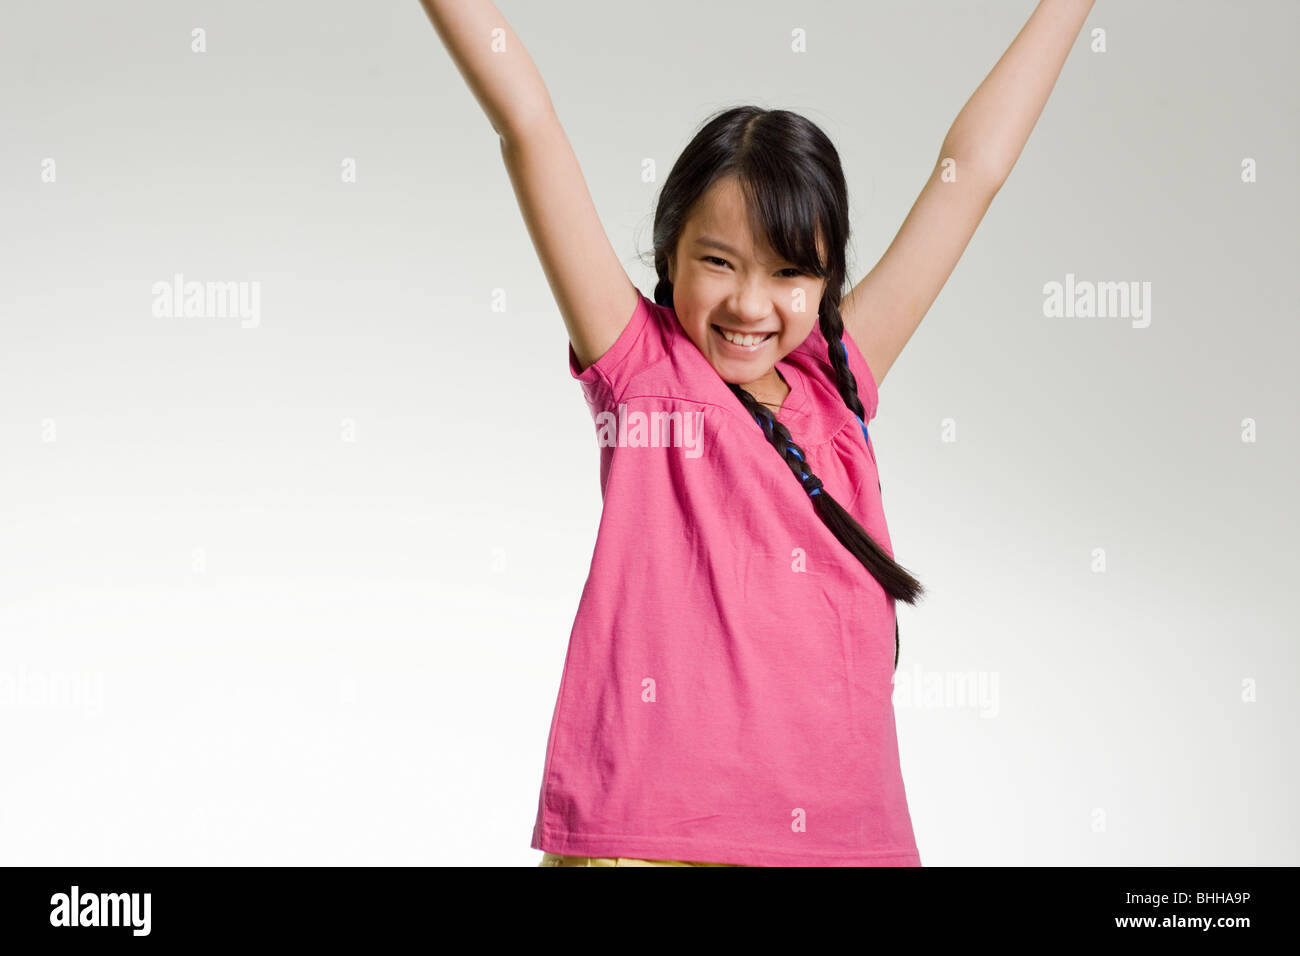 Girl making gestures Stock Photo - Alamy